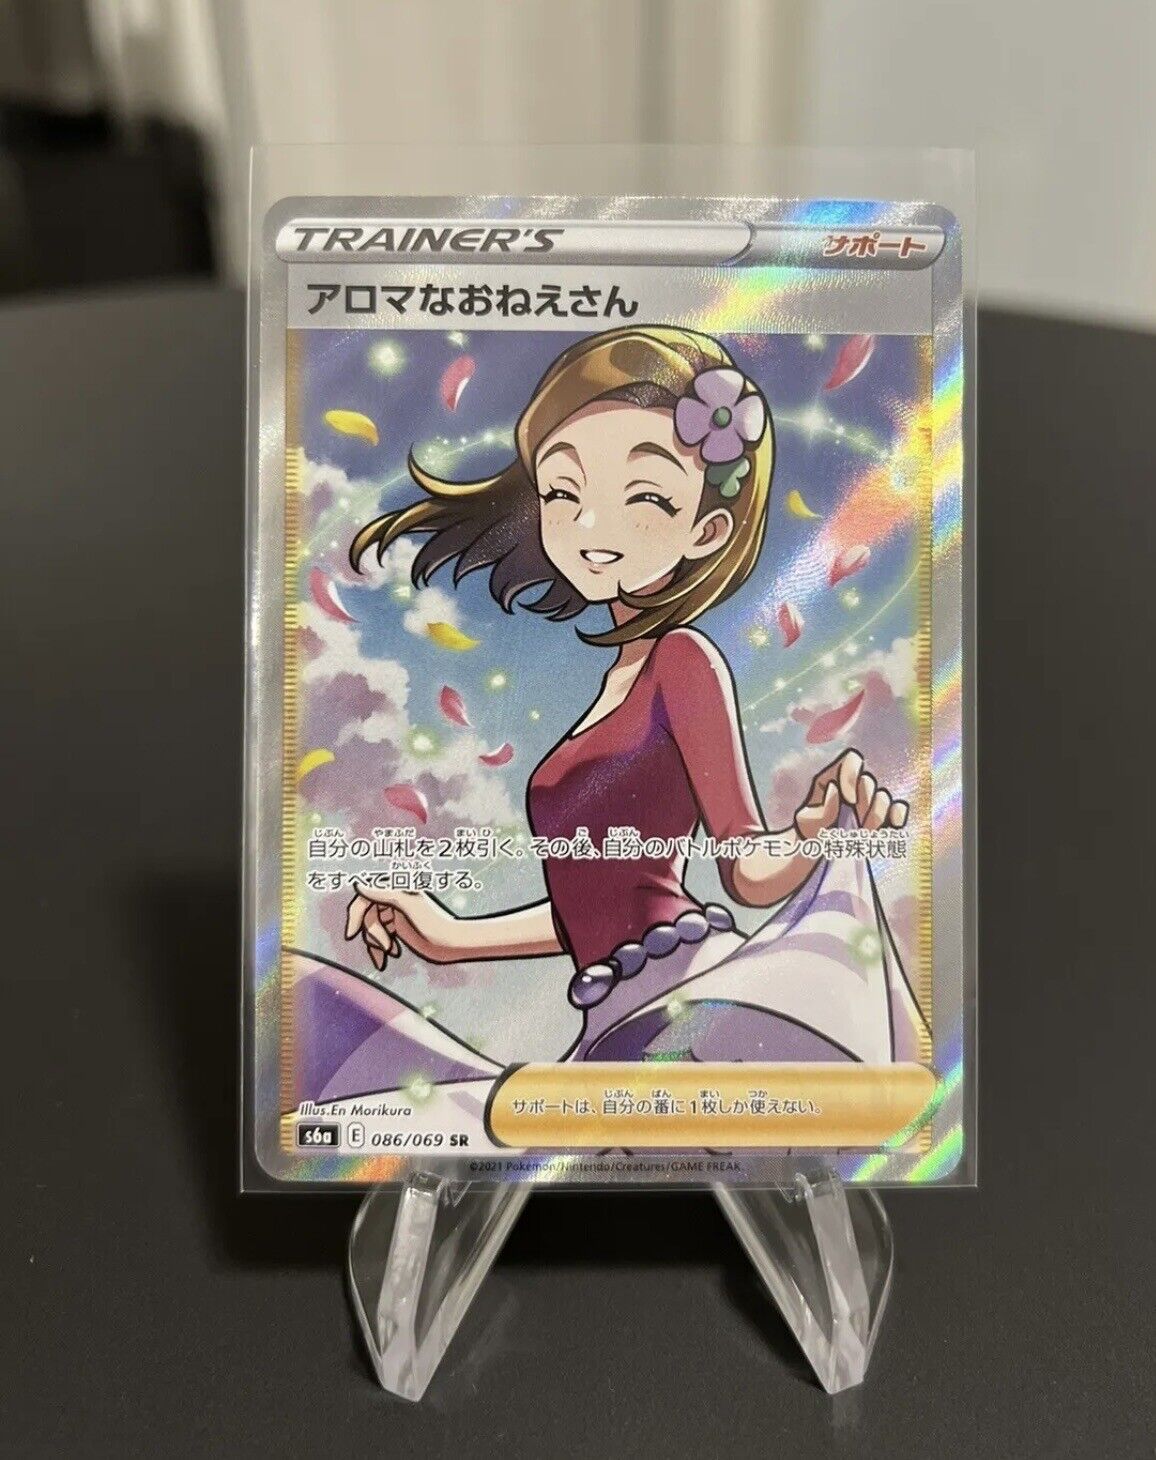 Aroma Lady FA SR 086/069 s6a Eevee Heroes PCA PSA Card Pokemon Japanese